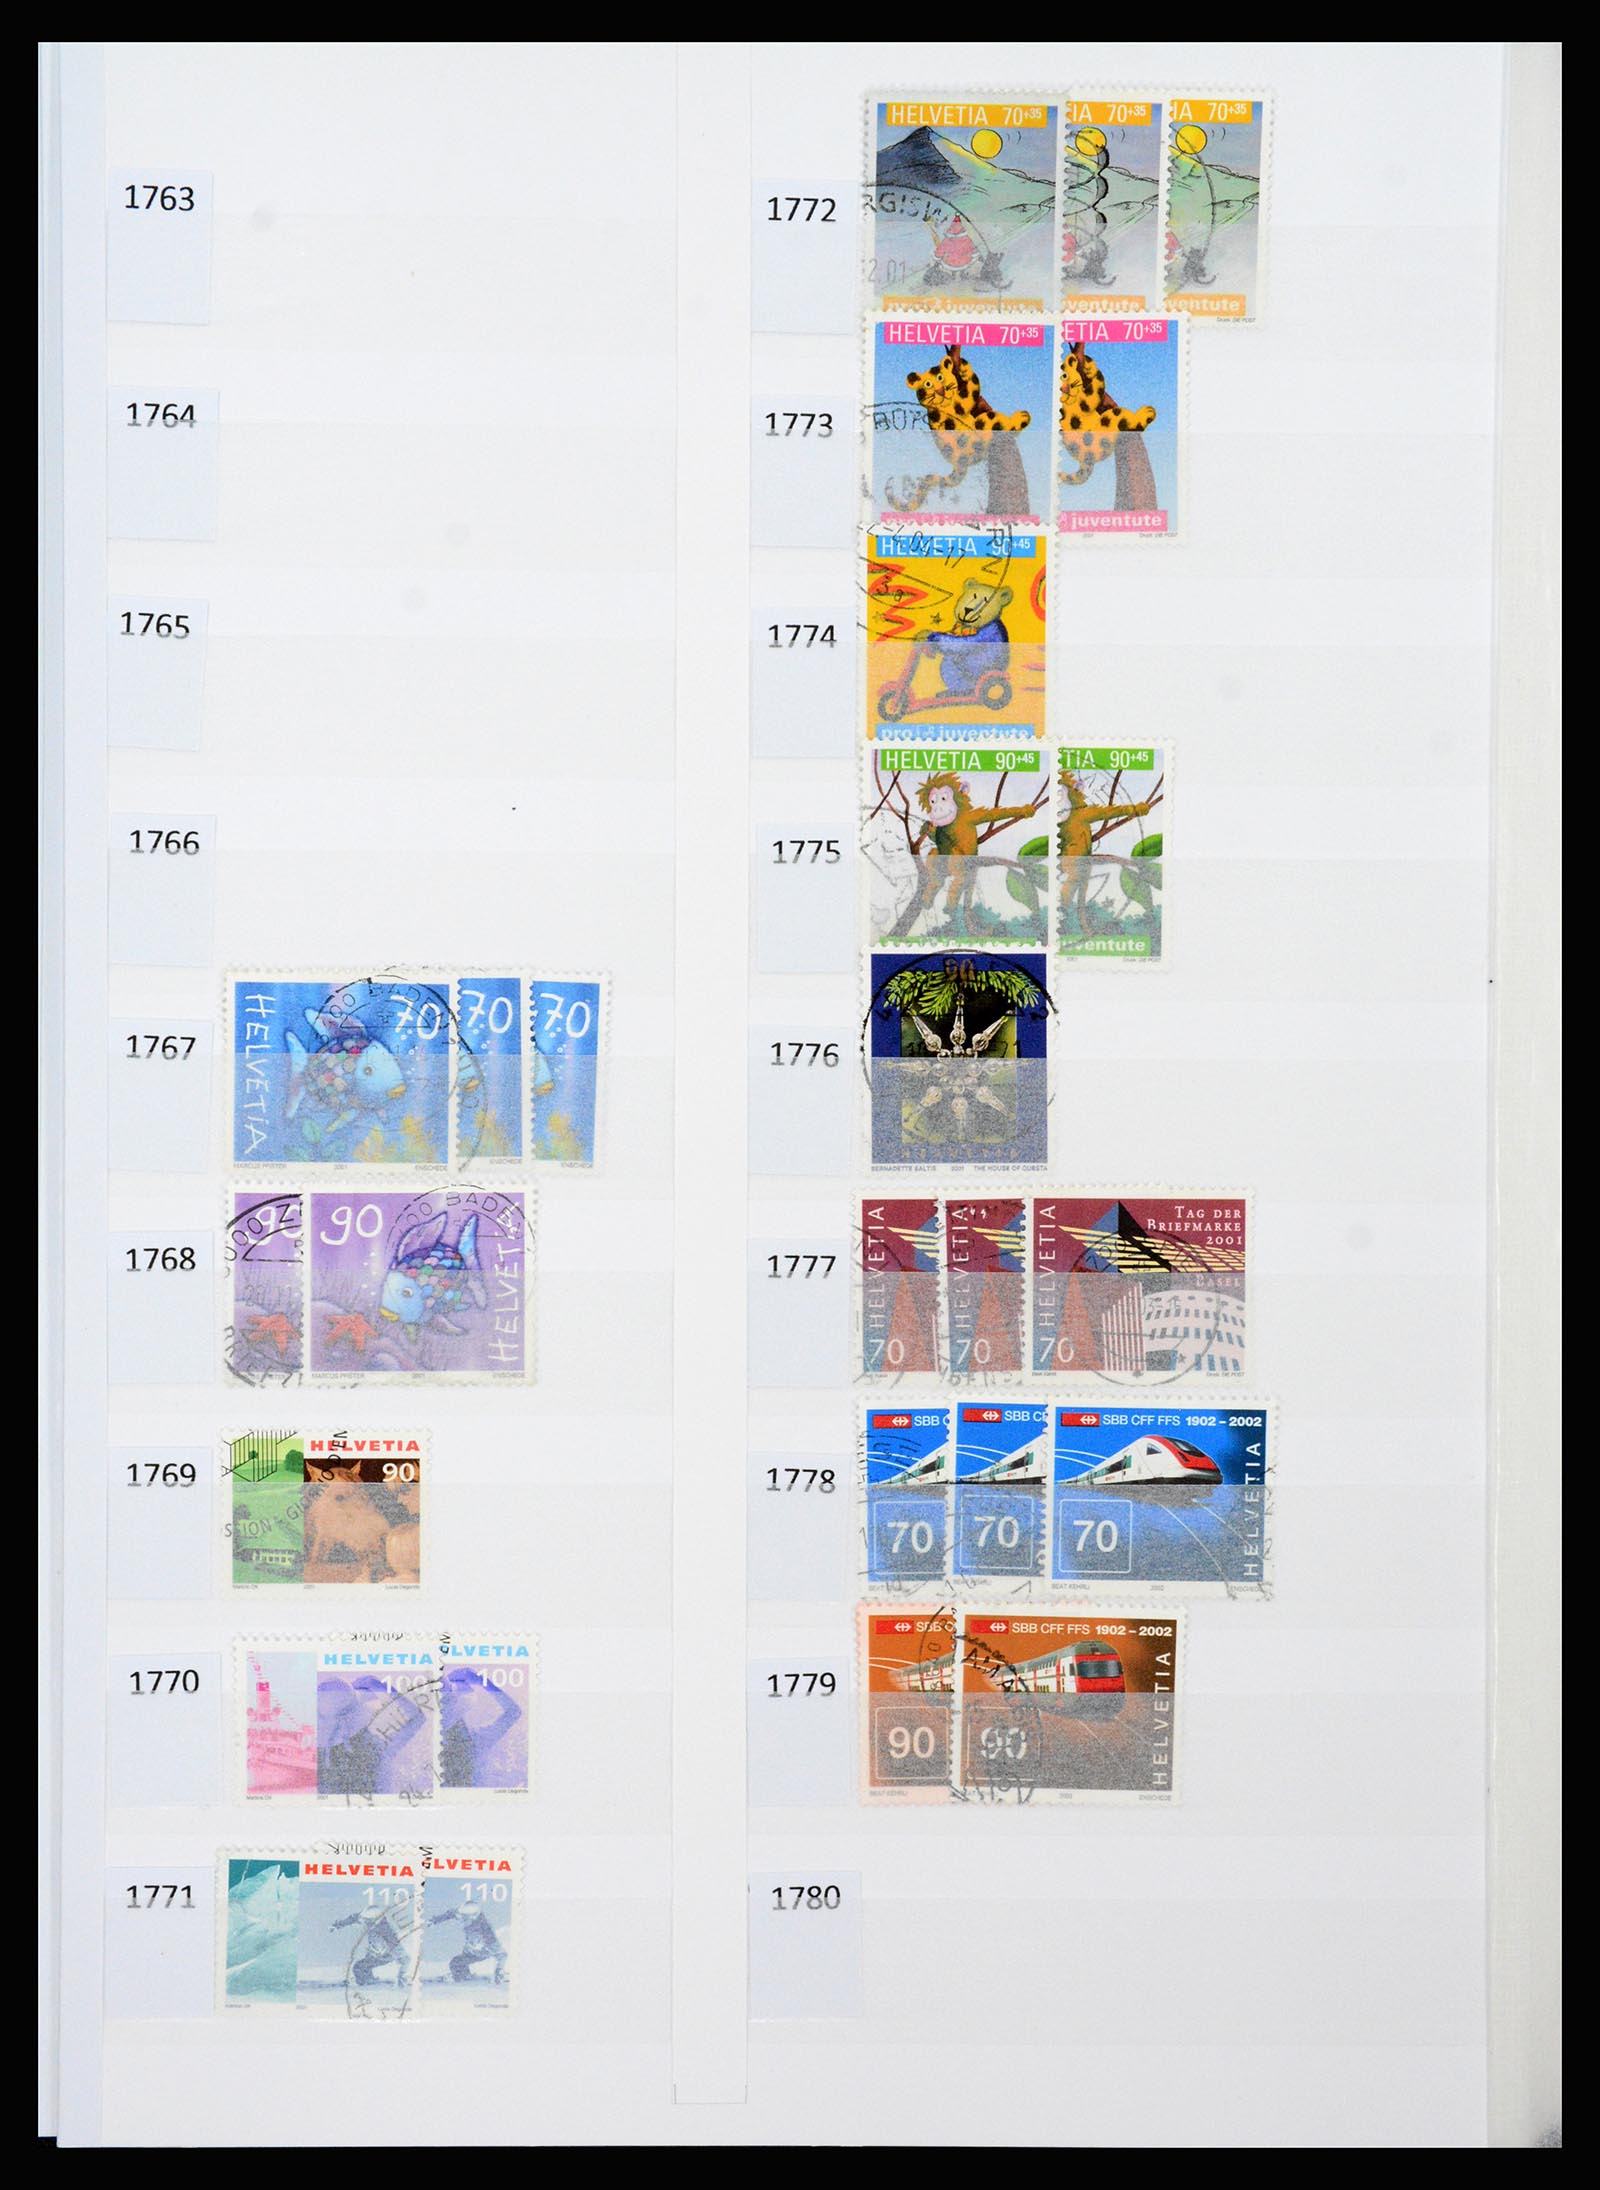 37252 099 - Stamp collection 37252 Switzerland 1900-2011.